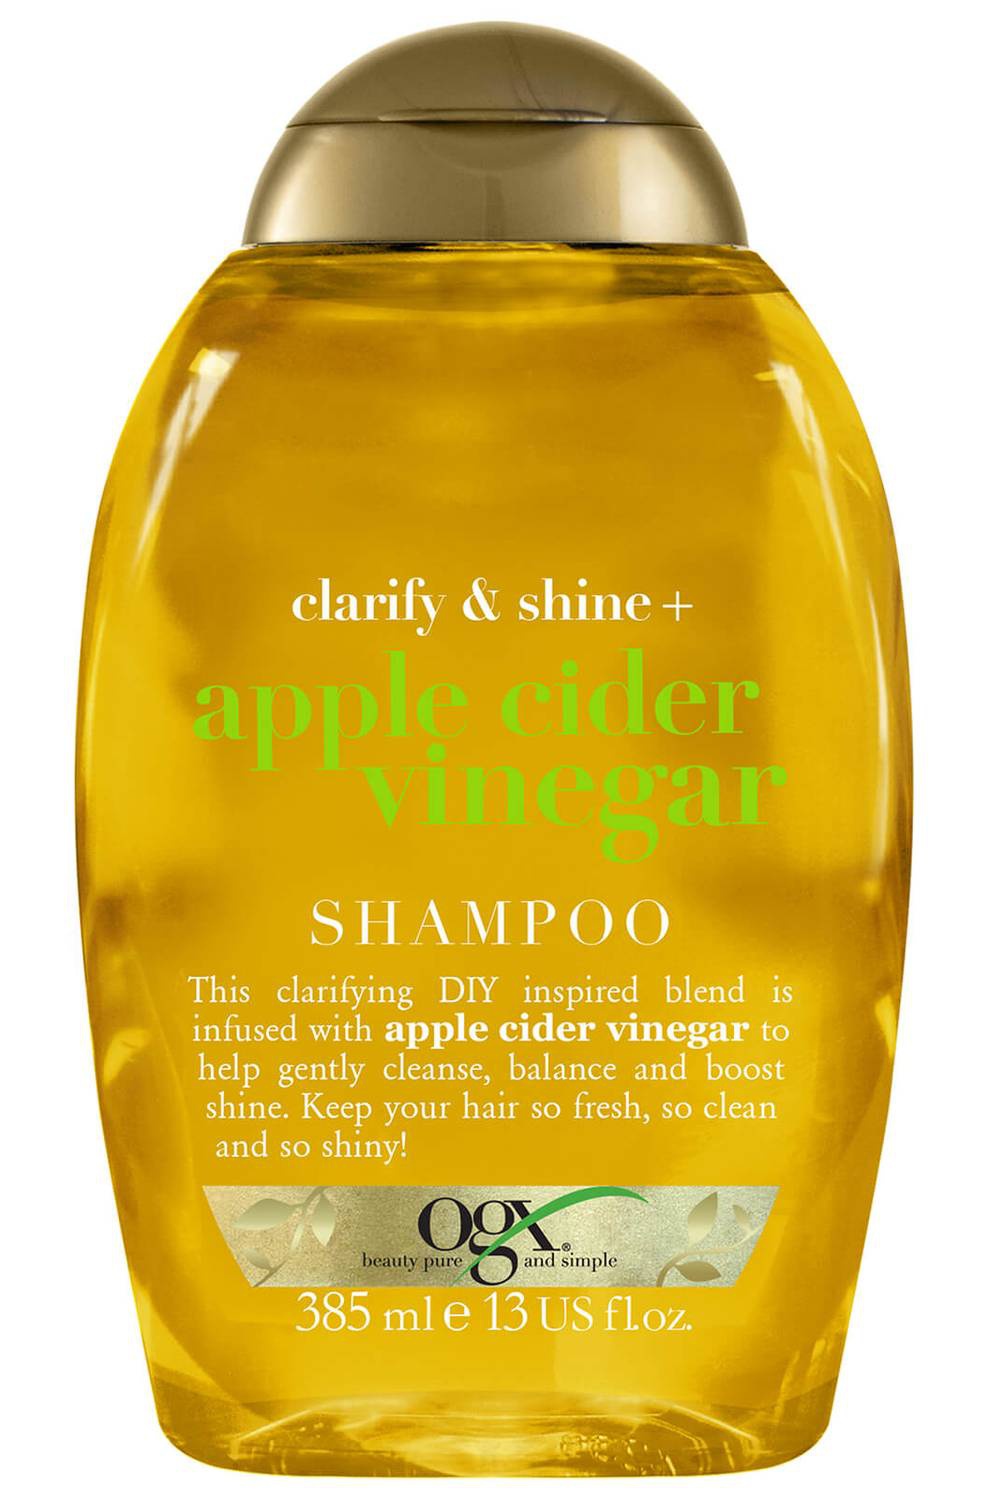 OGX Apple Cider Vinegar Clarifying Shampoo